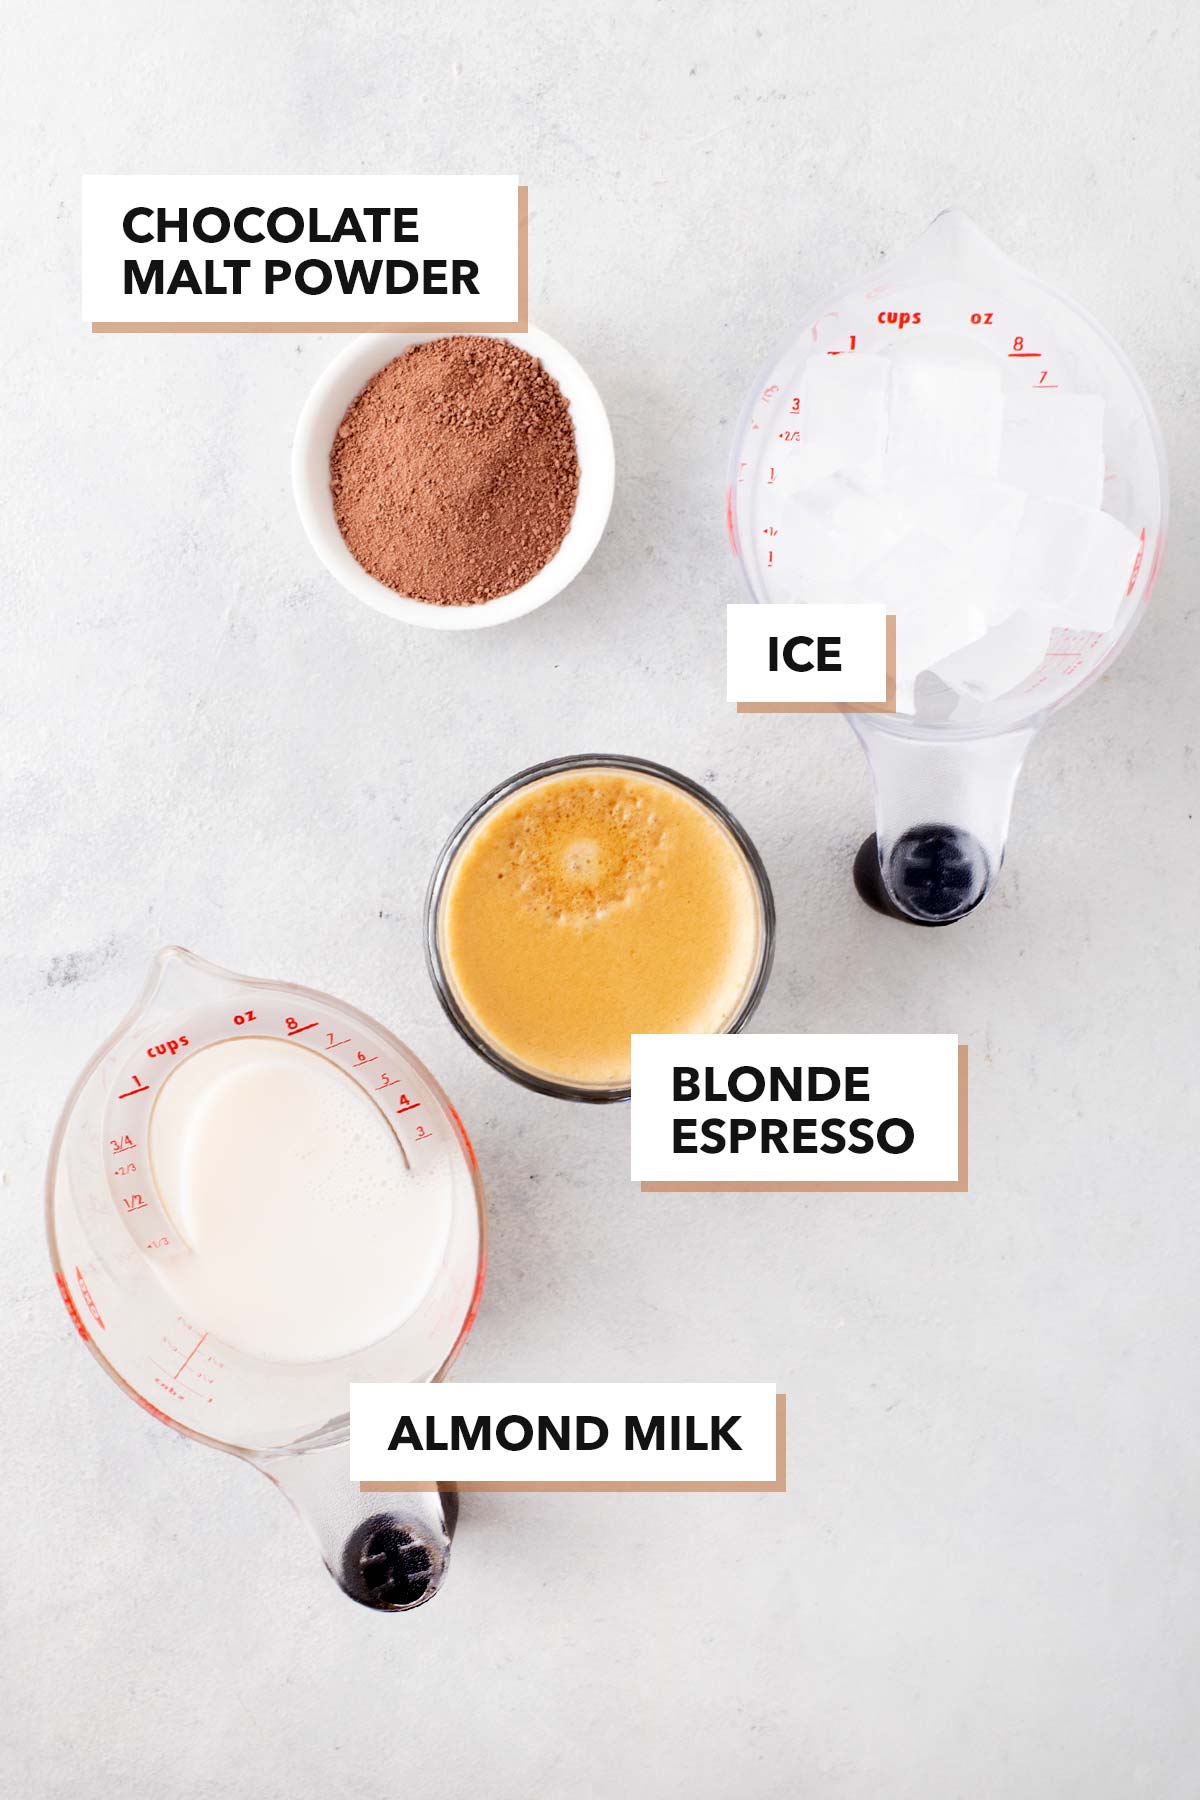 Starbucks Iced Chocolate Almondmilk Shaken Espresso copycat recipe ingredients.